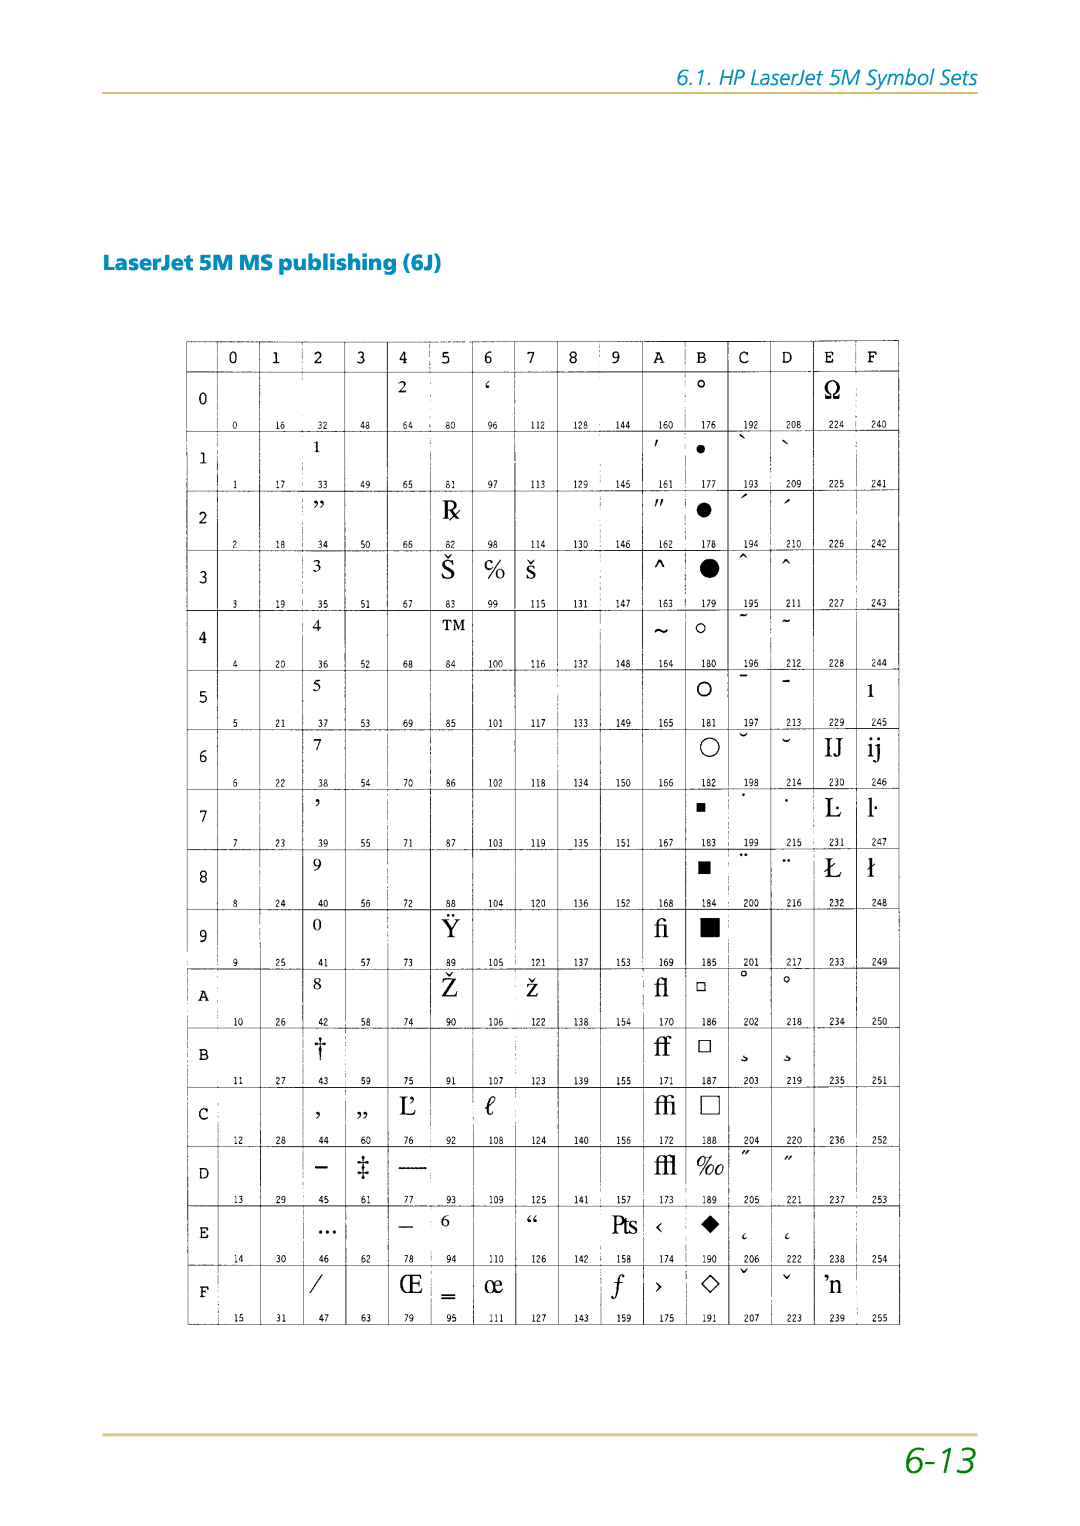 Kyocera FS-1700 user manual 6-13, HP LaserJet 5M Symbol Sets, LaserJet 5M MS publishing 6J 